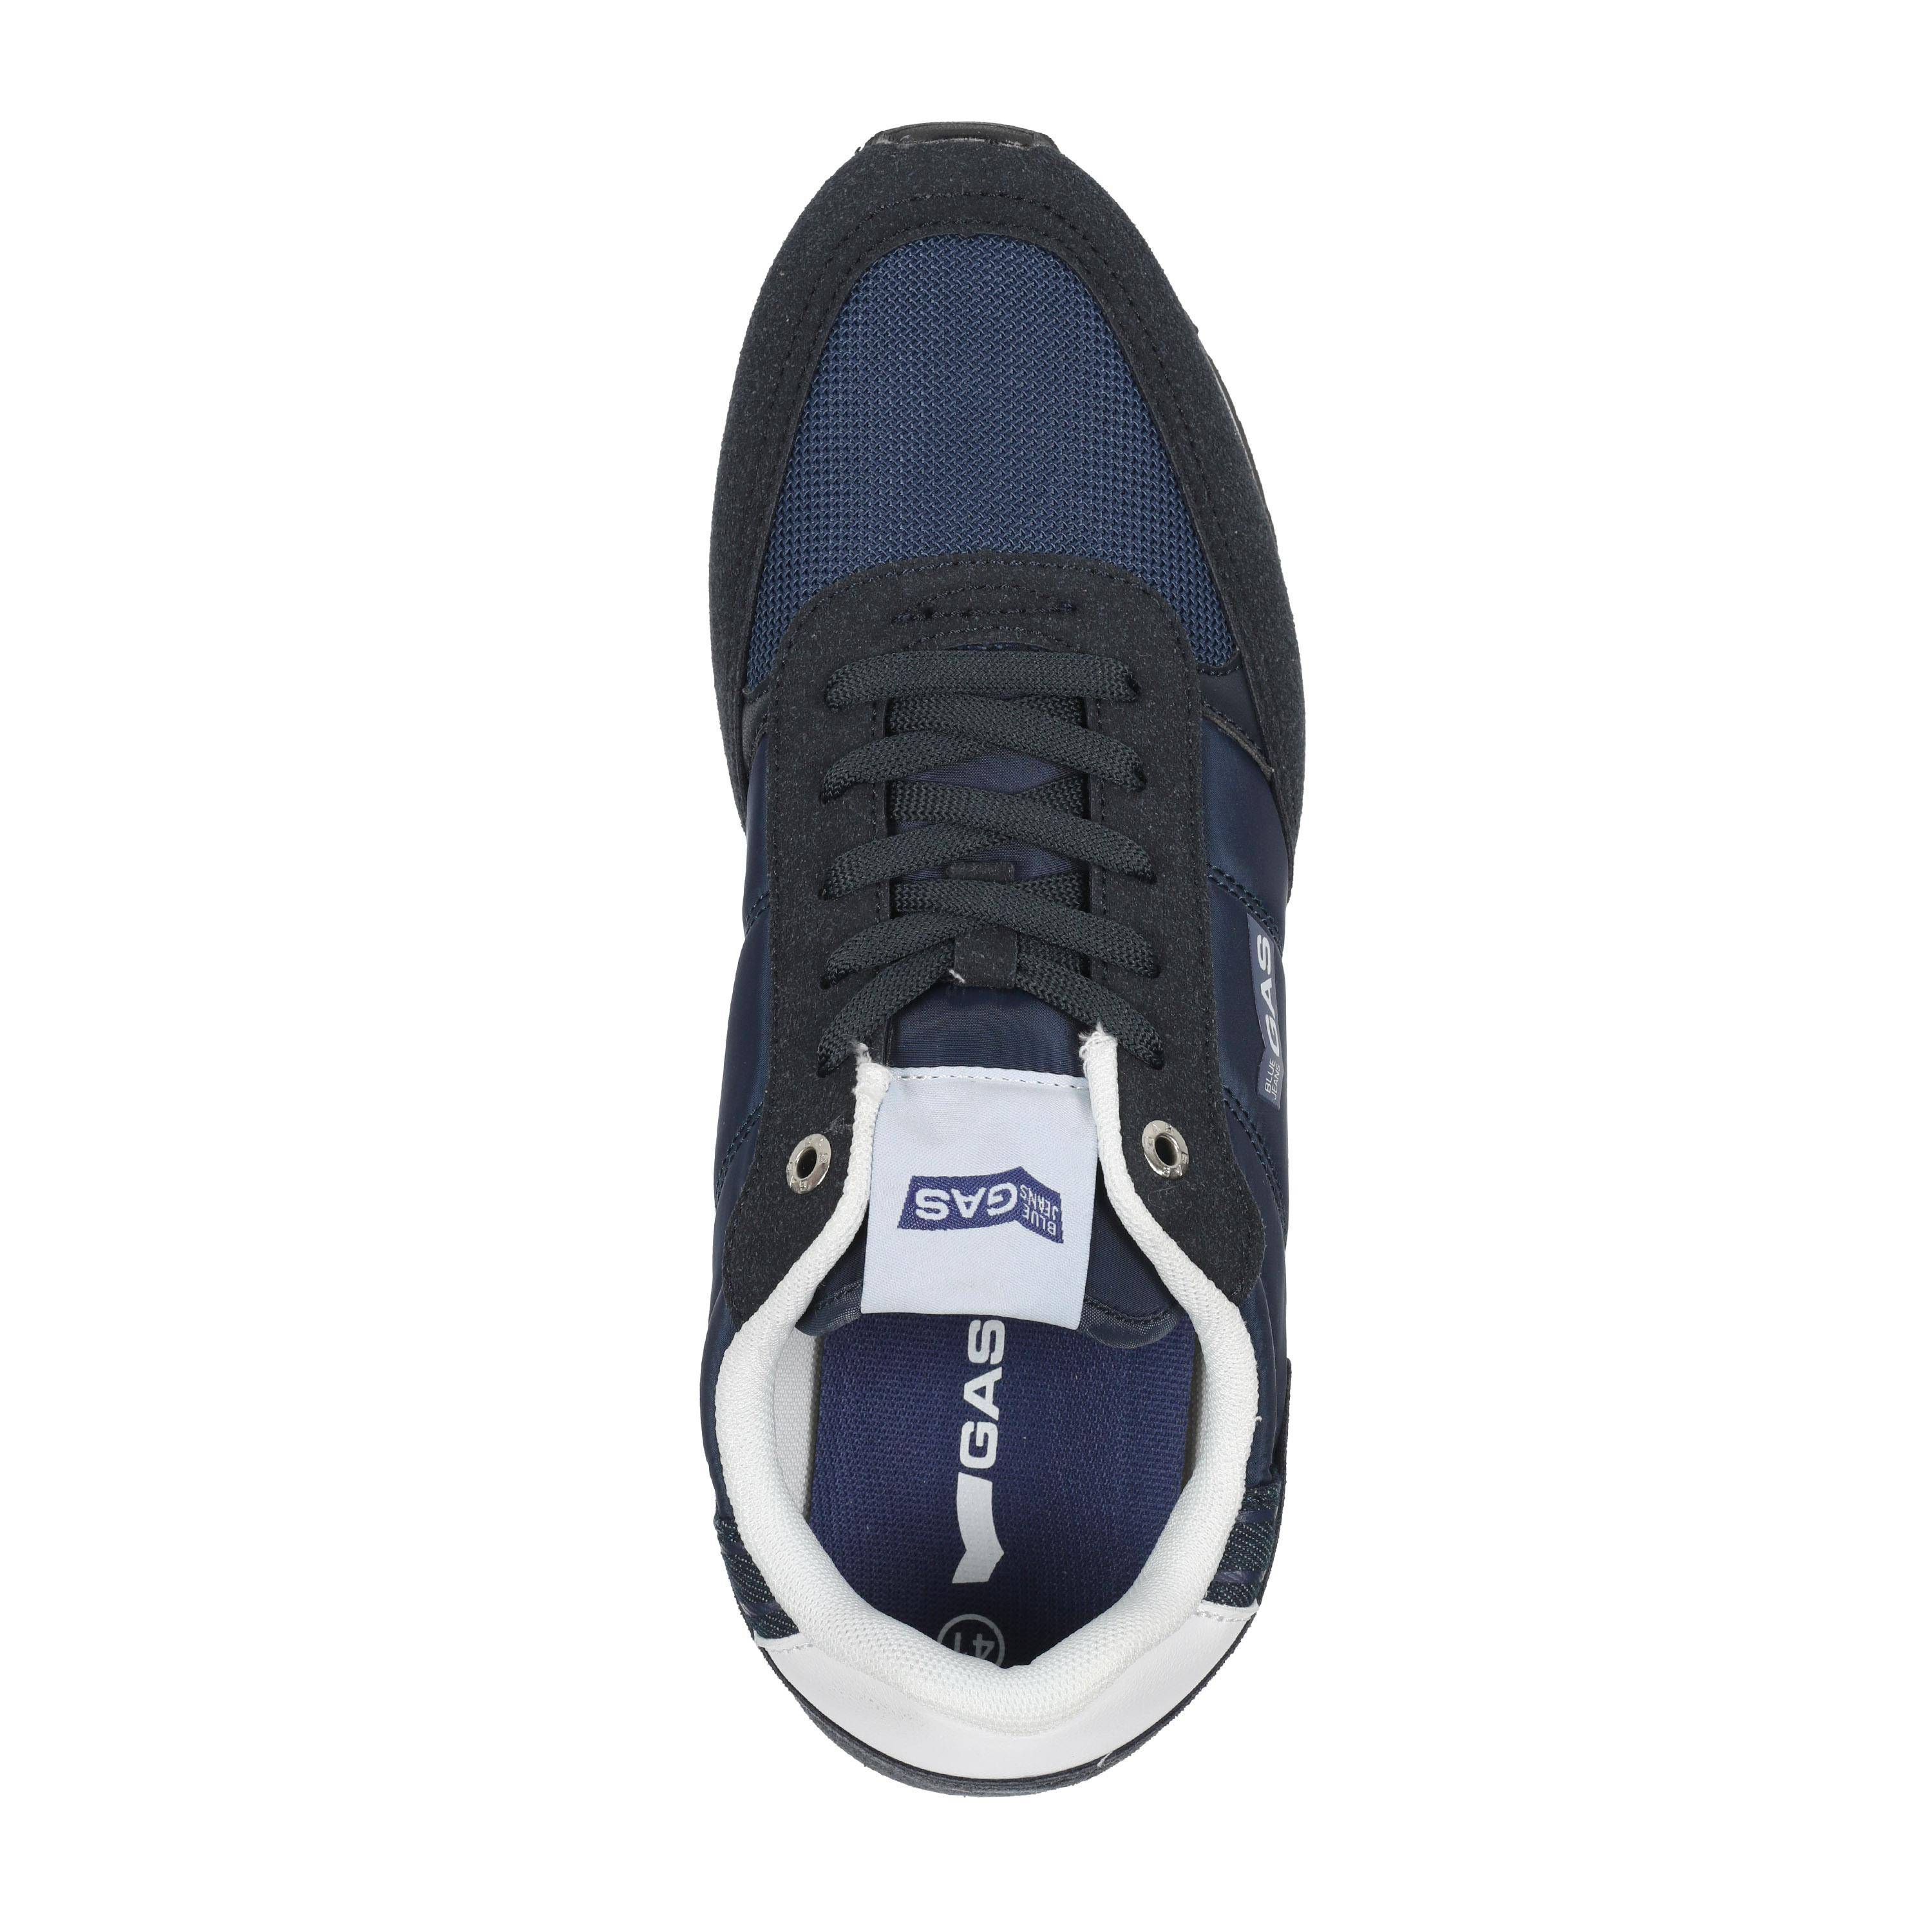 Мужские кроссовки GAS, синие, цвет синий, размер 42 - фото 4